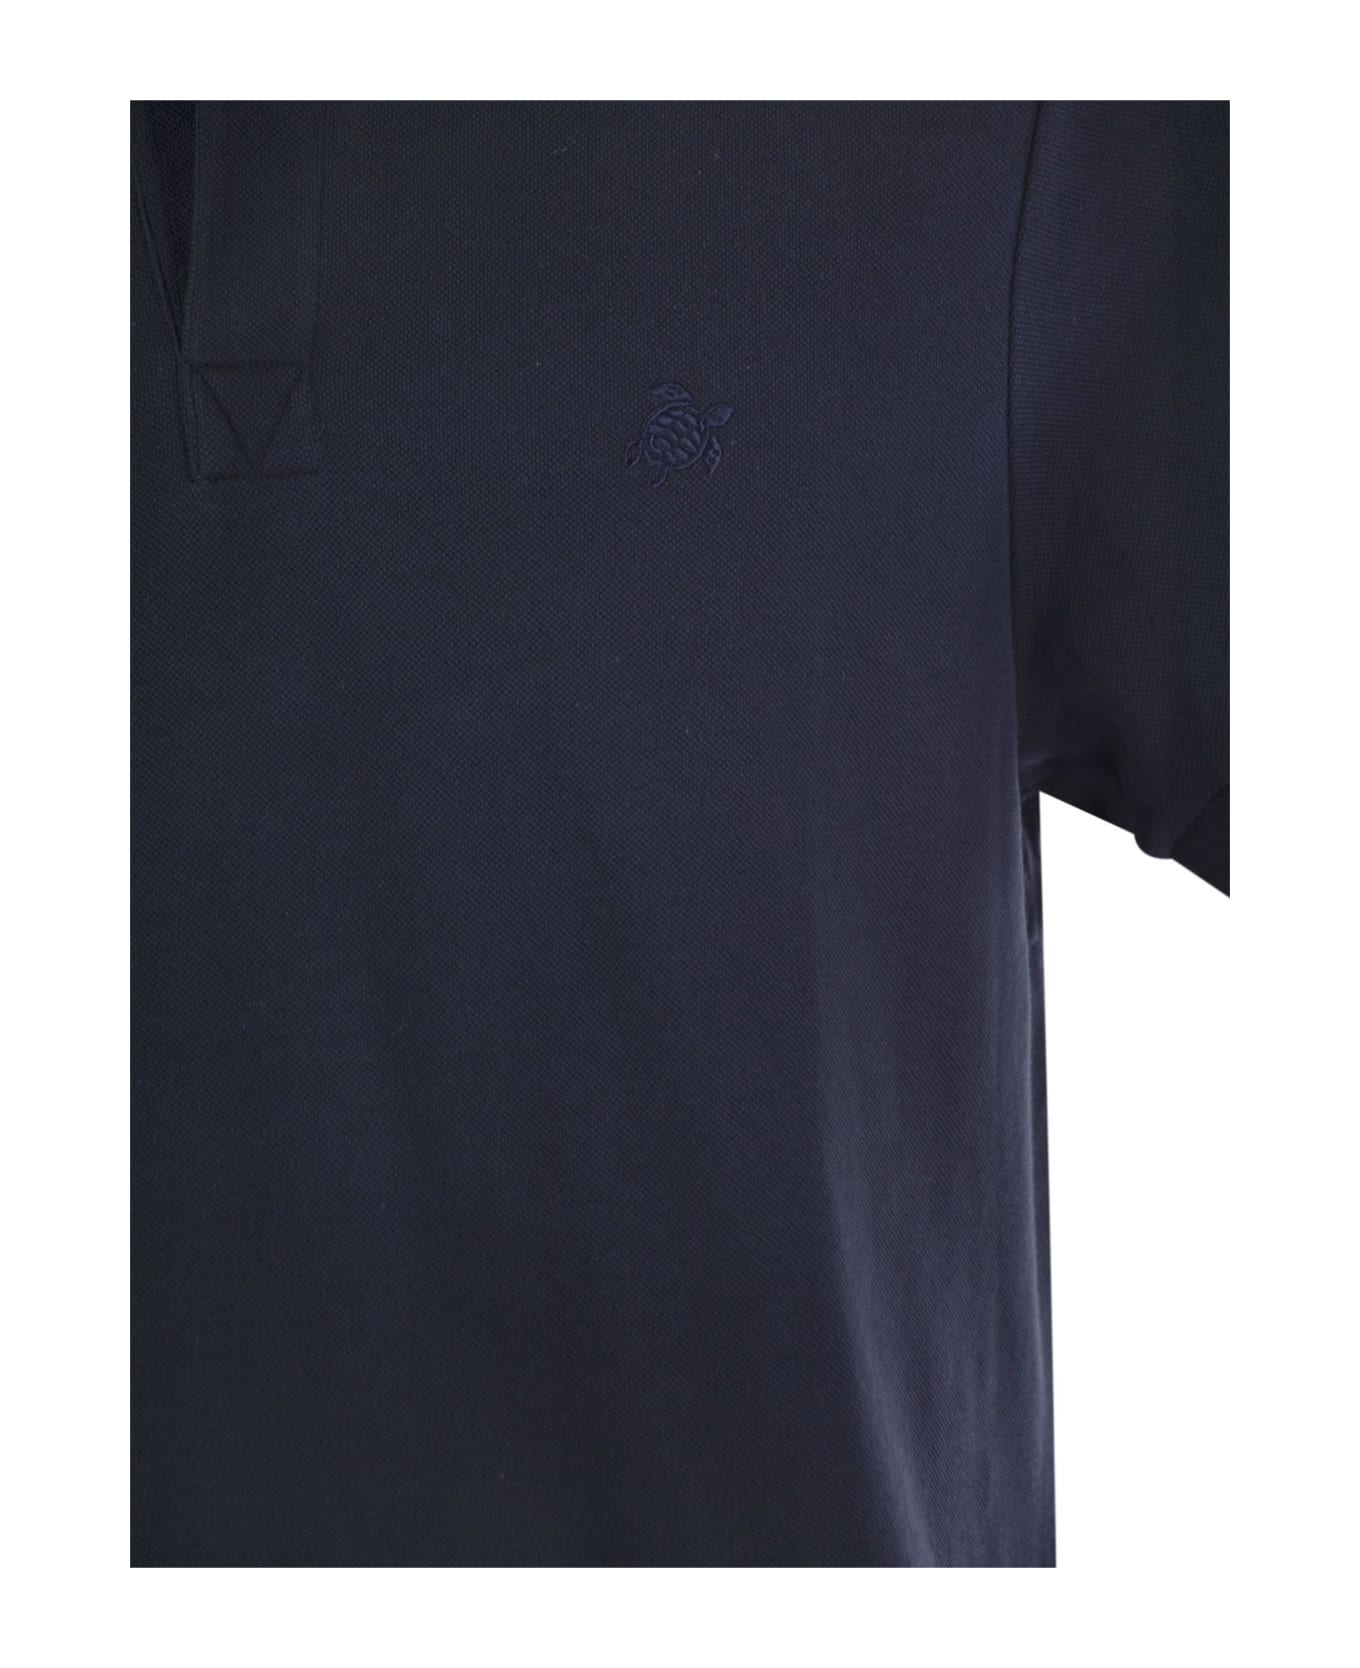 Vilebrequin Organic Cotton Pique Polo Shirt - Marine Blue